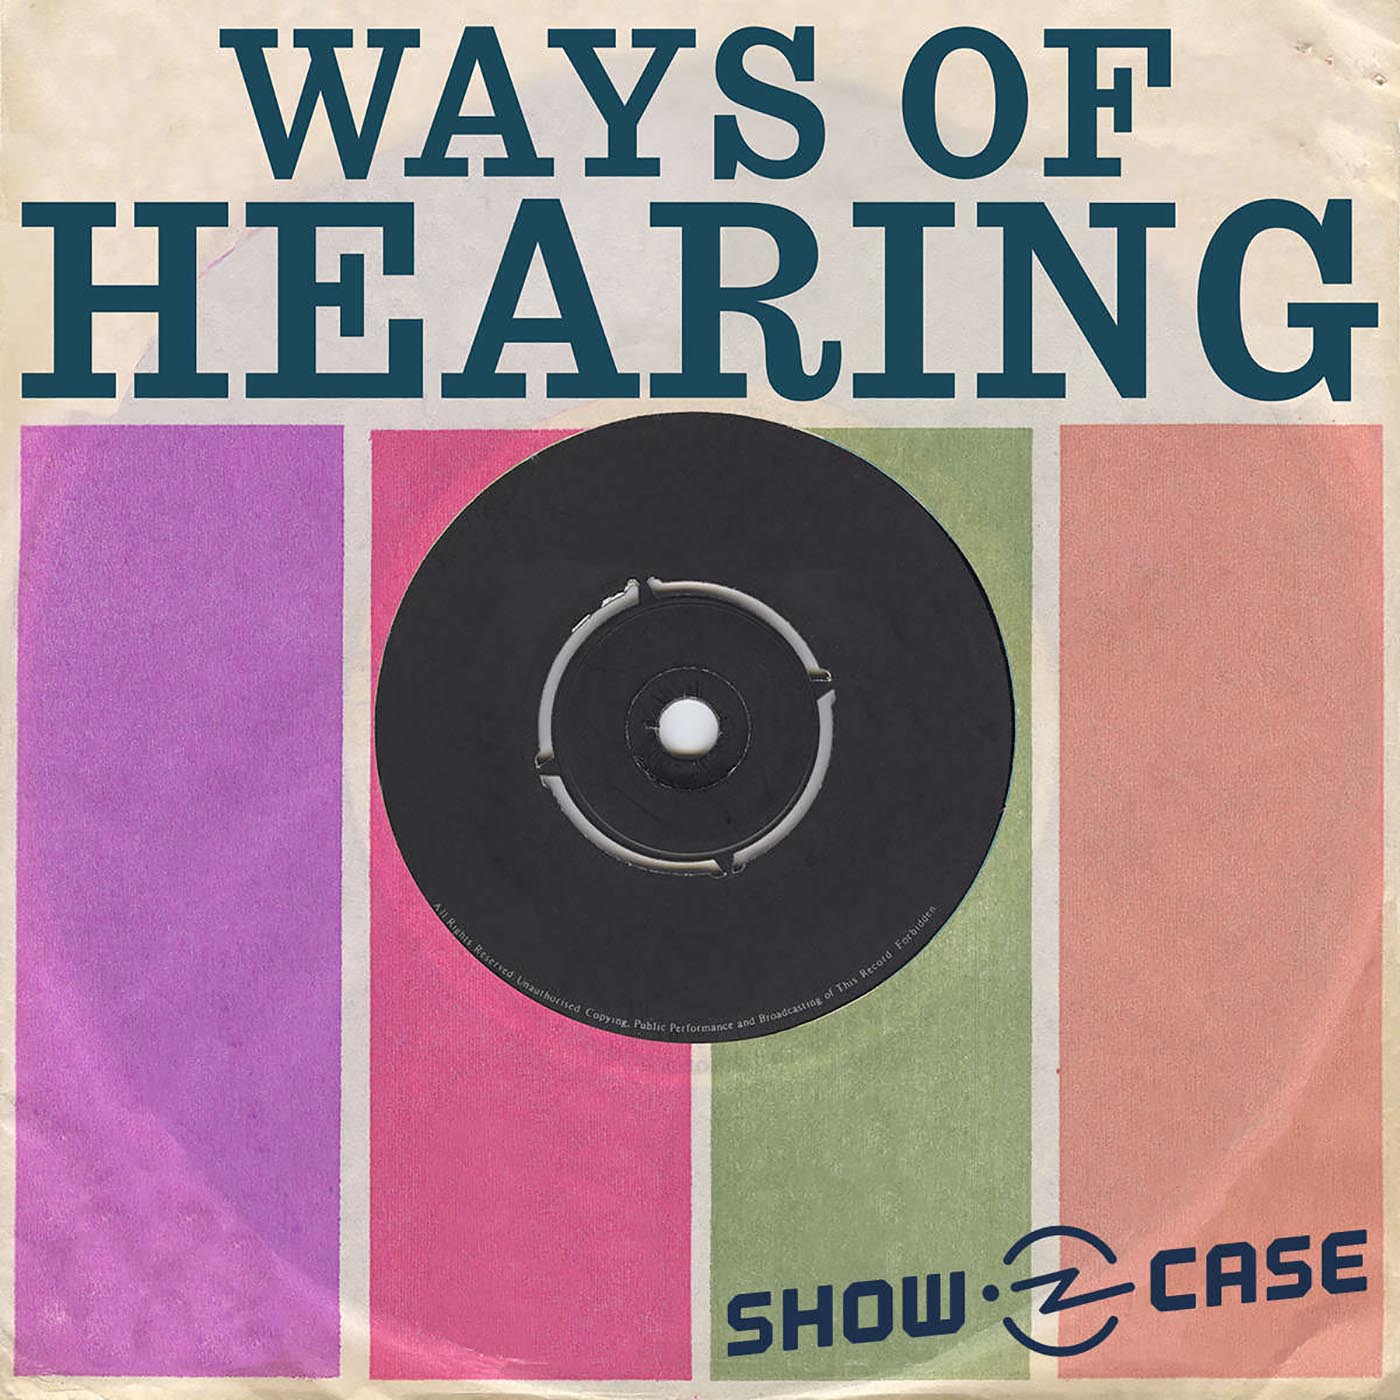 Ways of Hearing #3 – LOVE